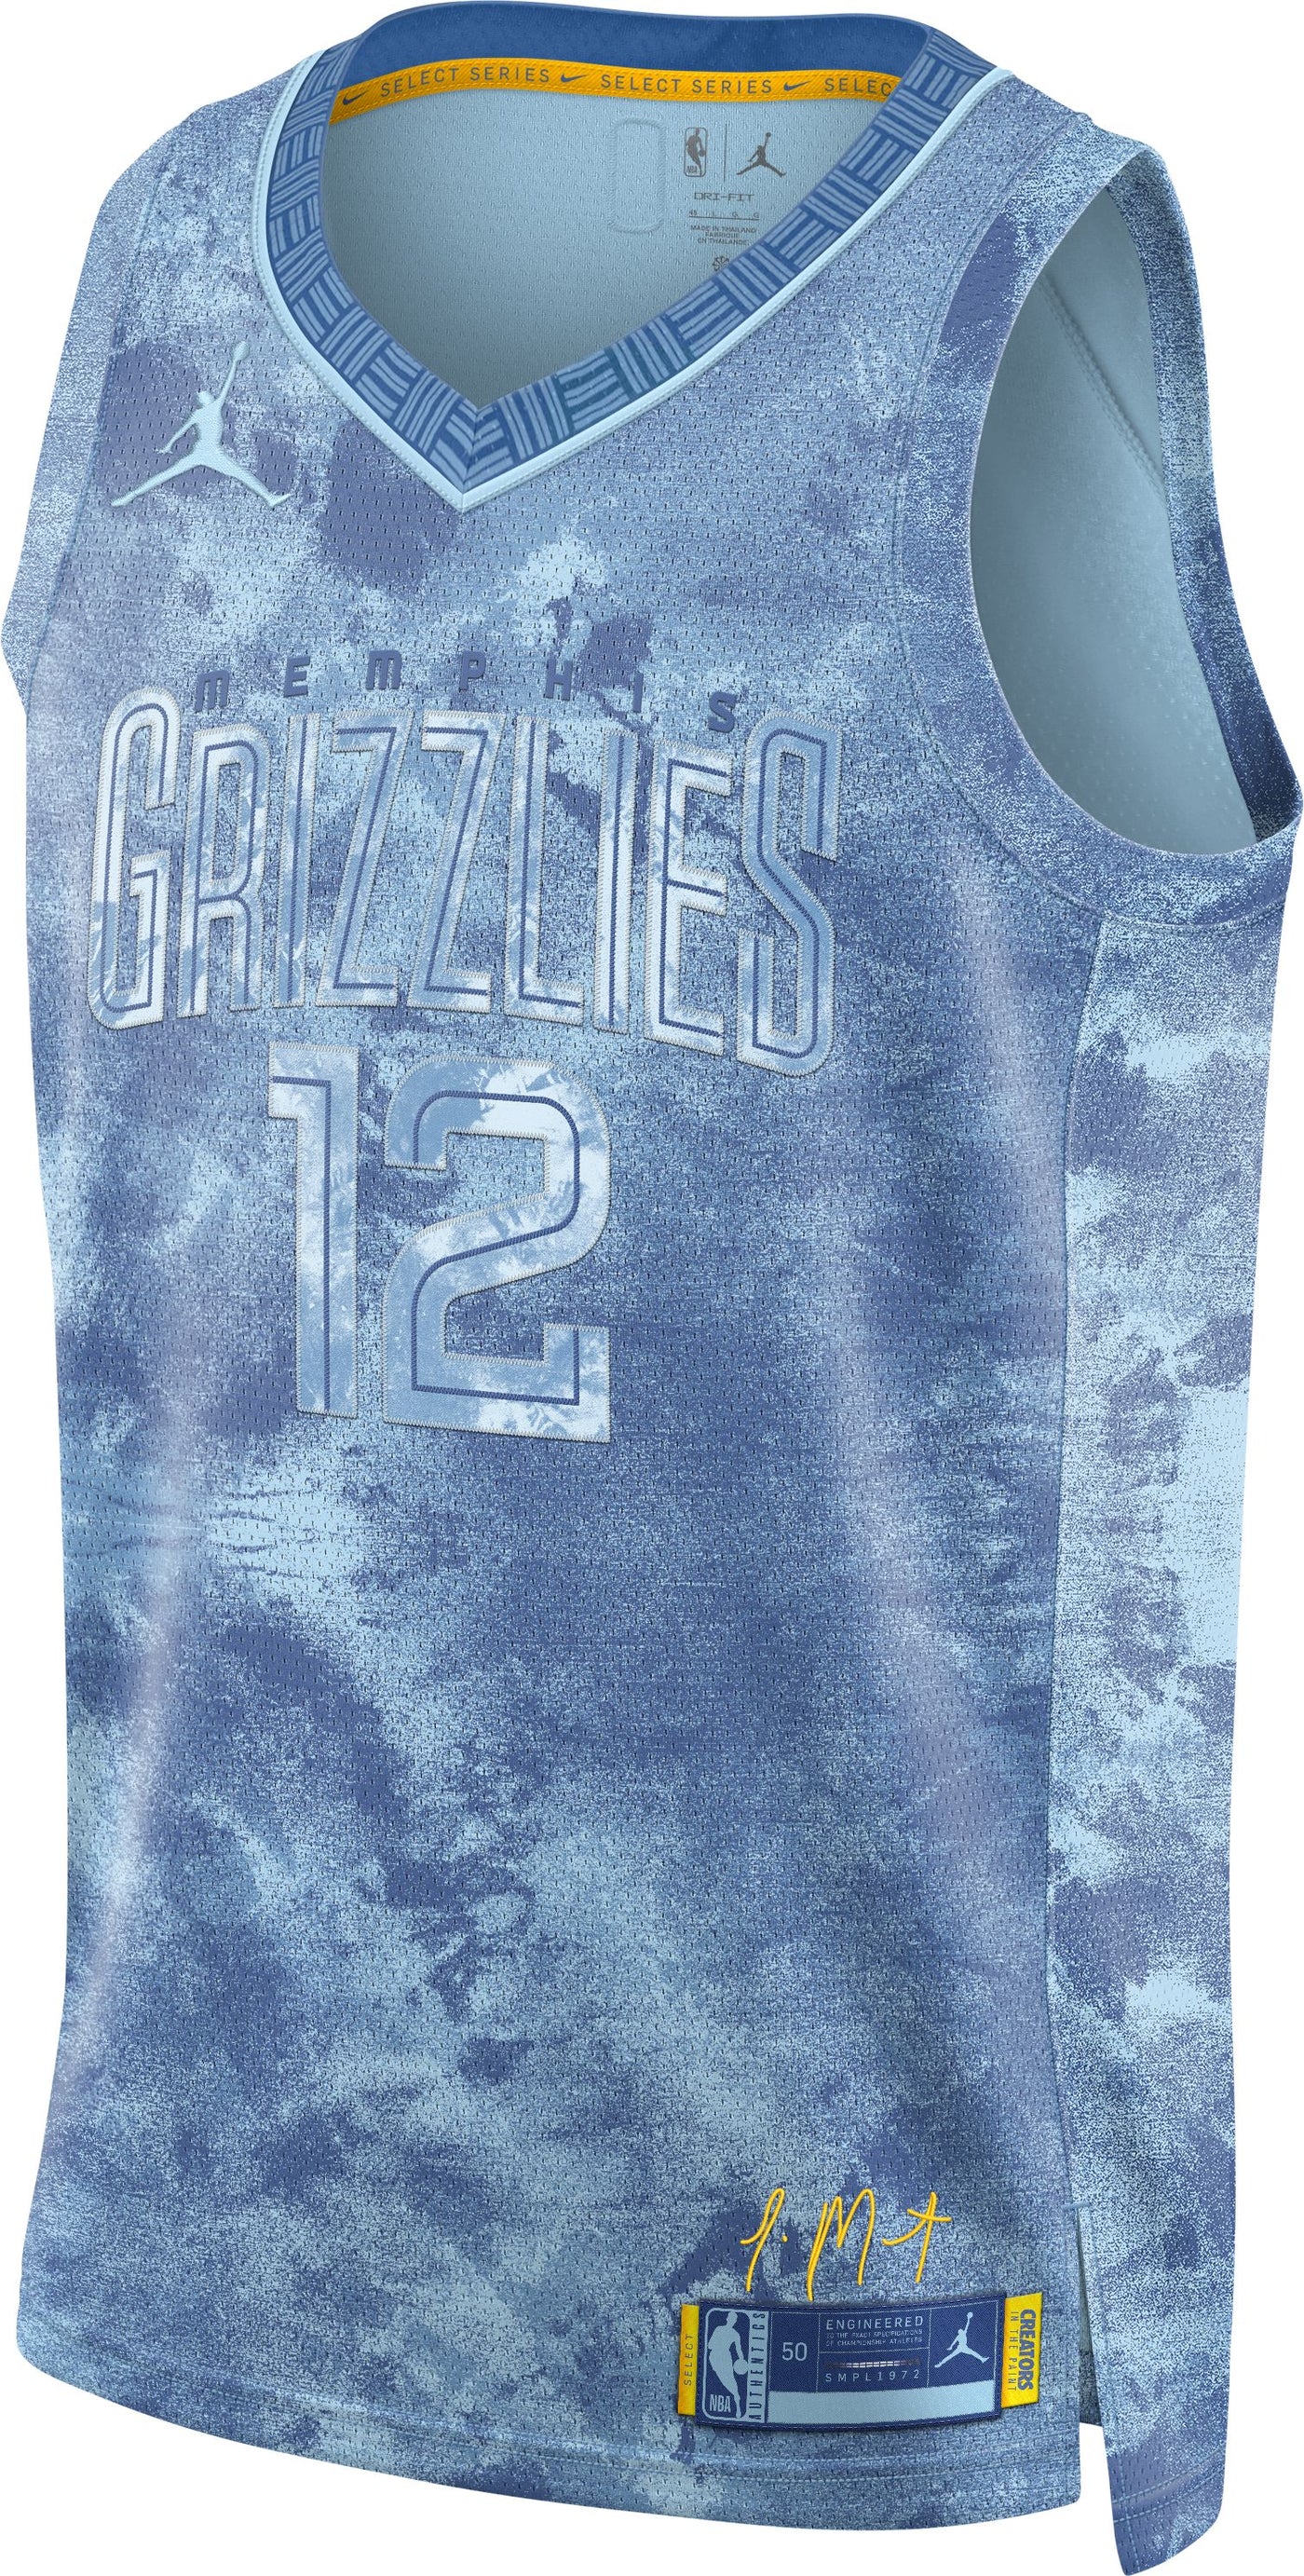 Memphis Grizzlies Merchandise, Grizzlies Apparel, Grizzlies Jersey,  Grizzlies Gear